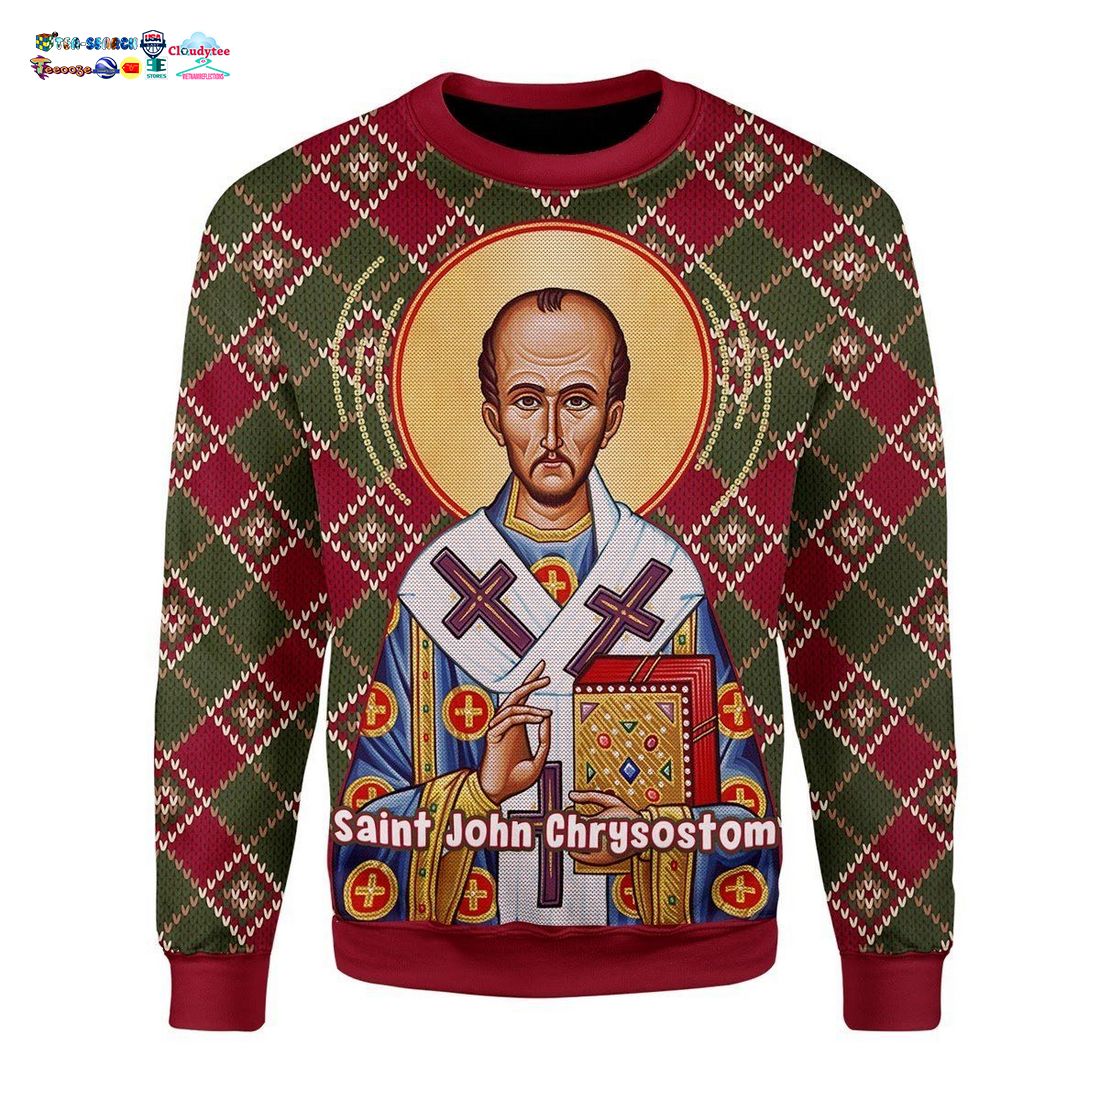 Saint John Chrysostom Ugly Christmas Sweater